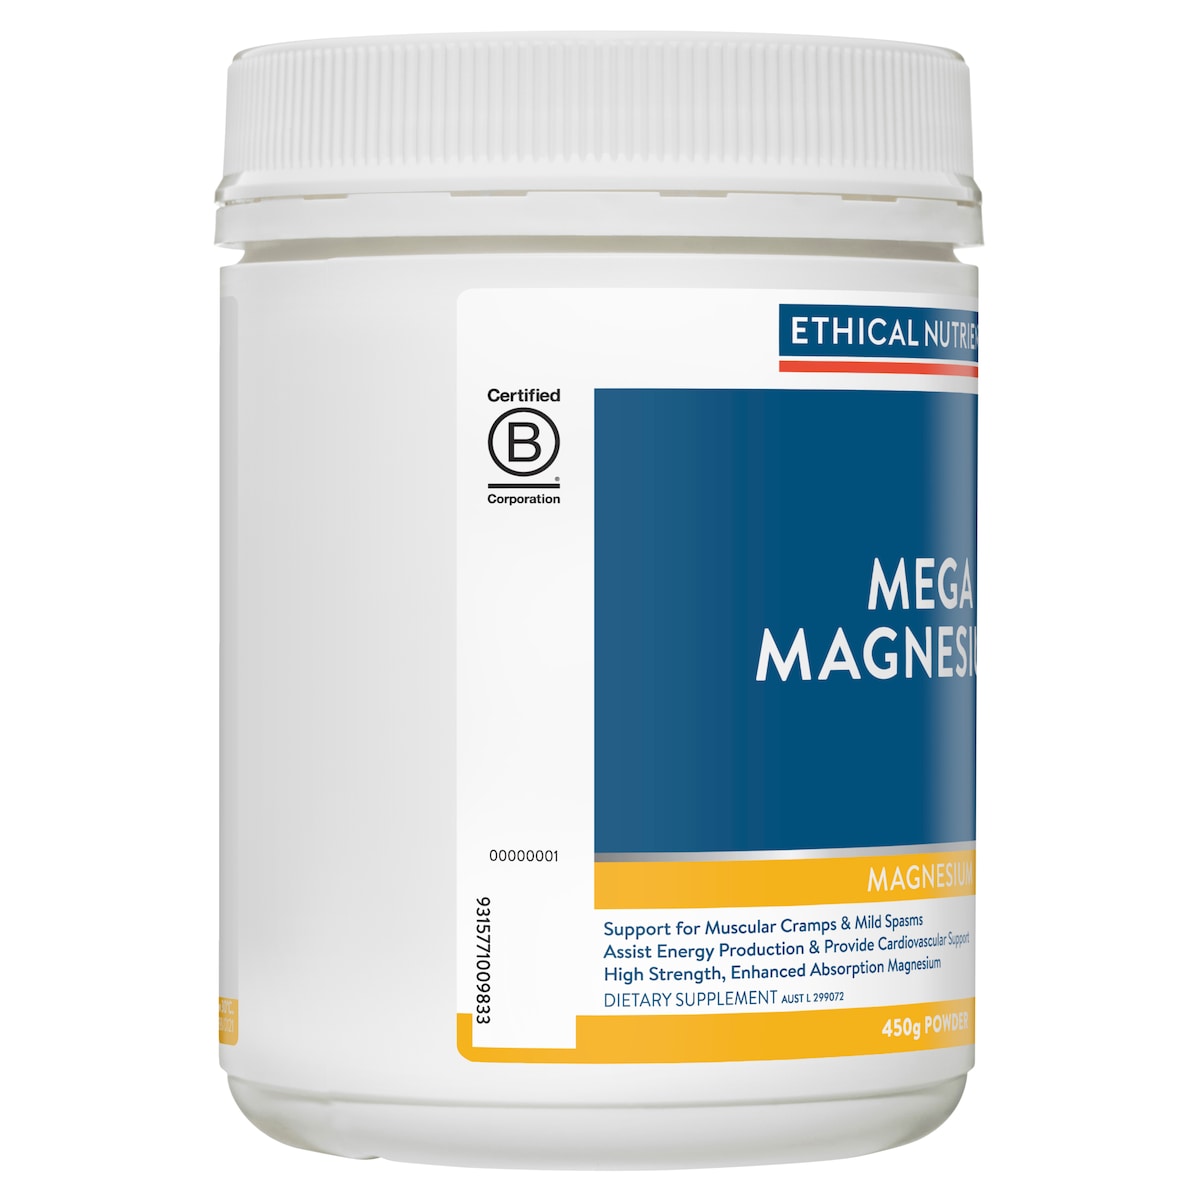 Ethical Nutrients Mega Magnesium Raspberry 450G Powder